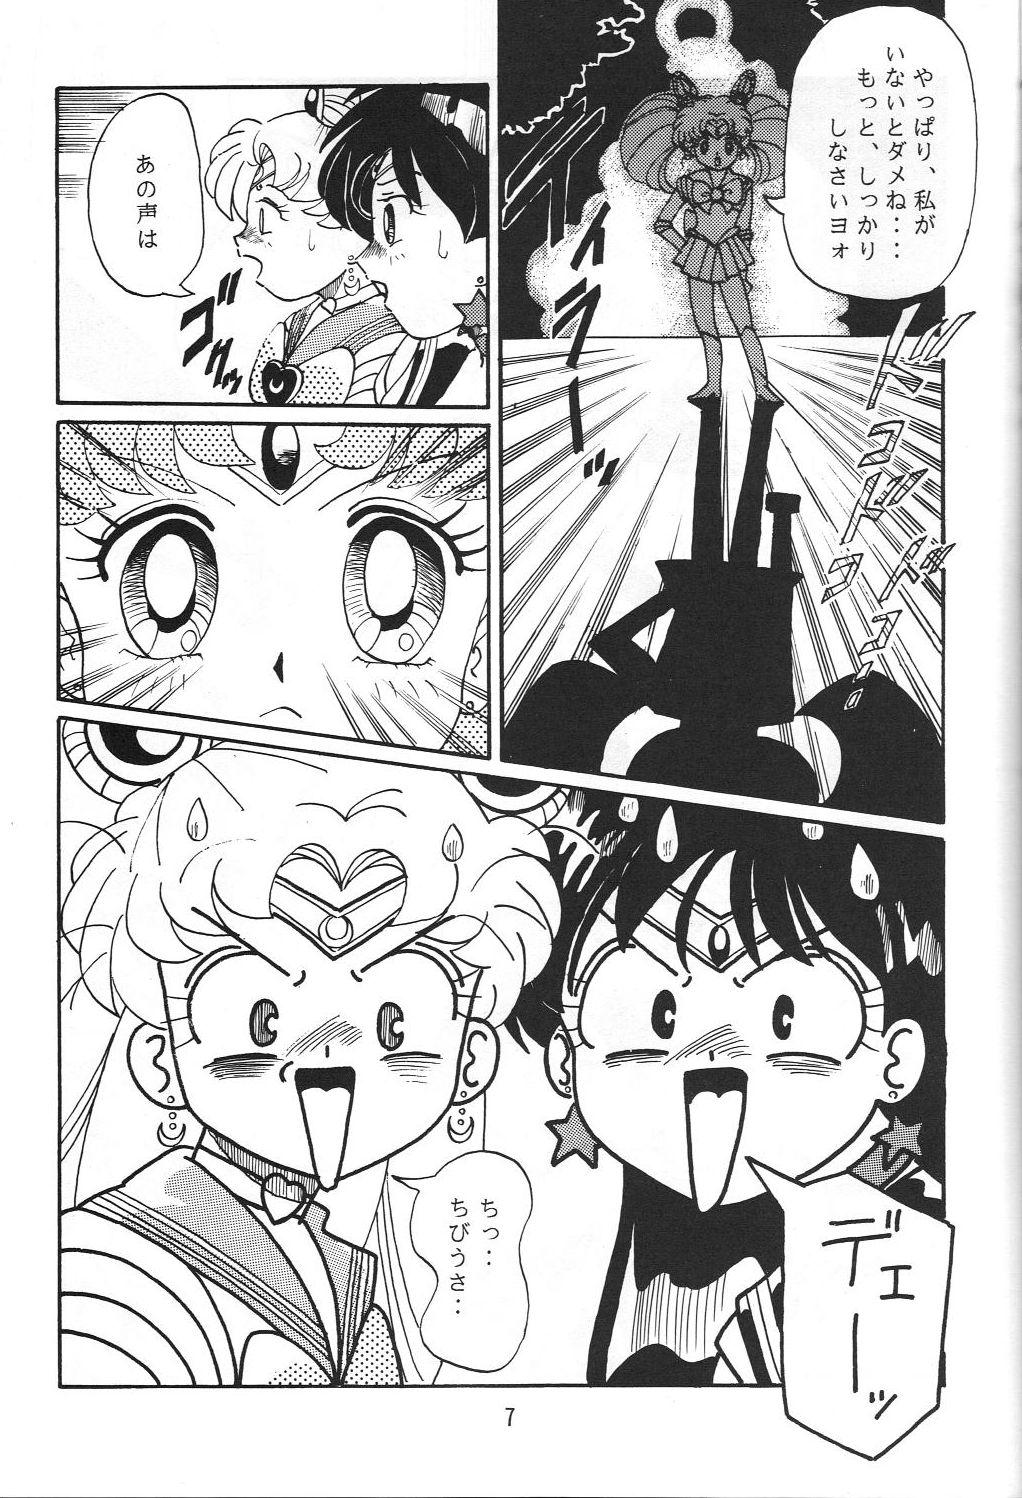 Busty Jiyuu Tamashii - Sailor moon Ah my goddess Tenchi muyo Stepsister - Page 6